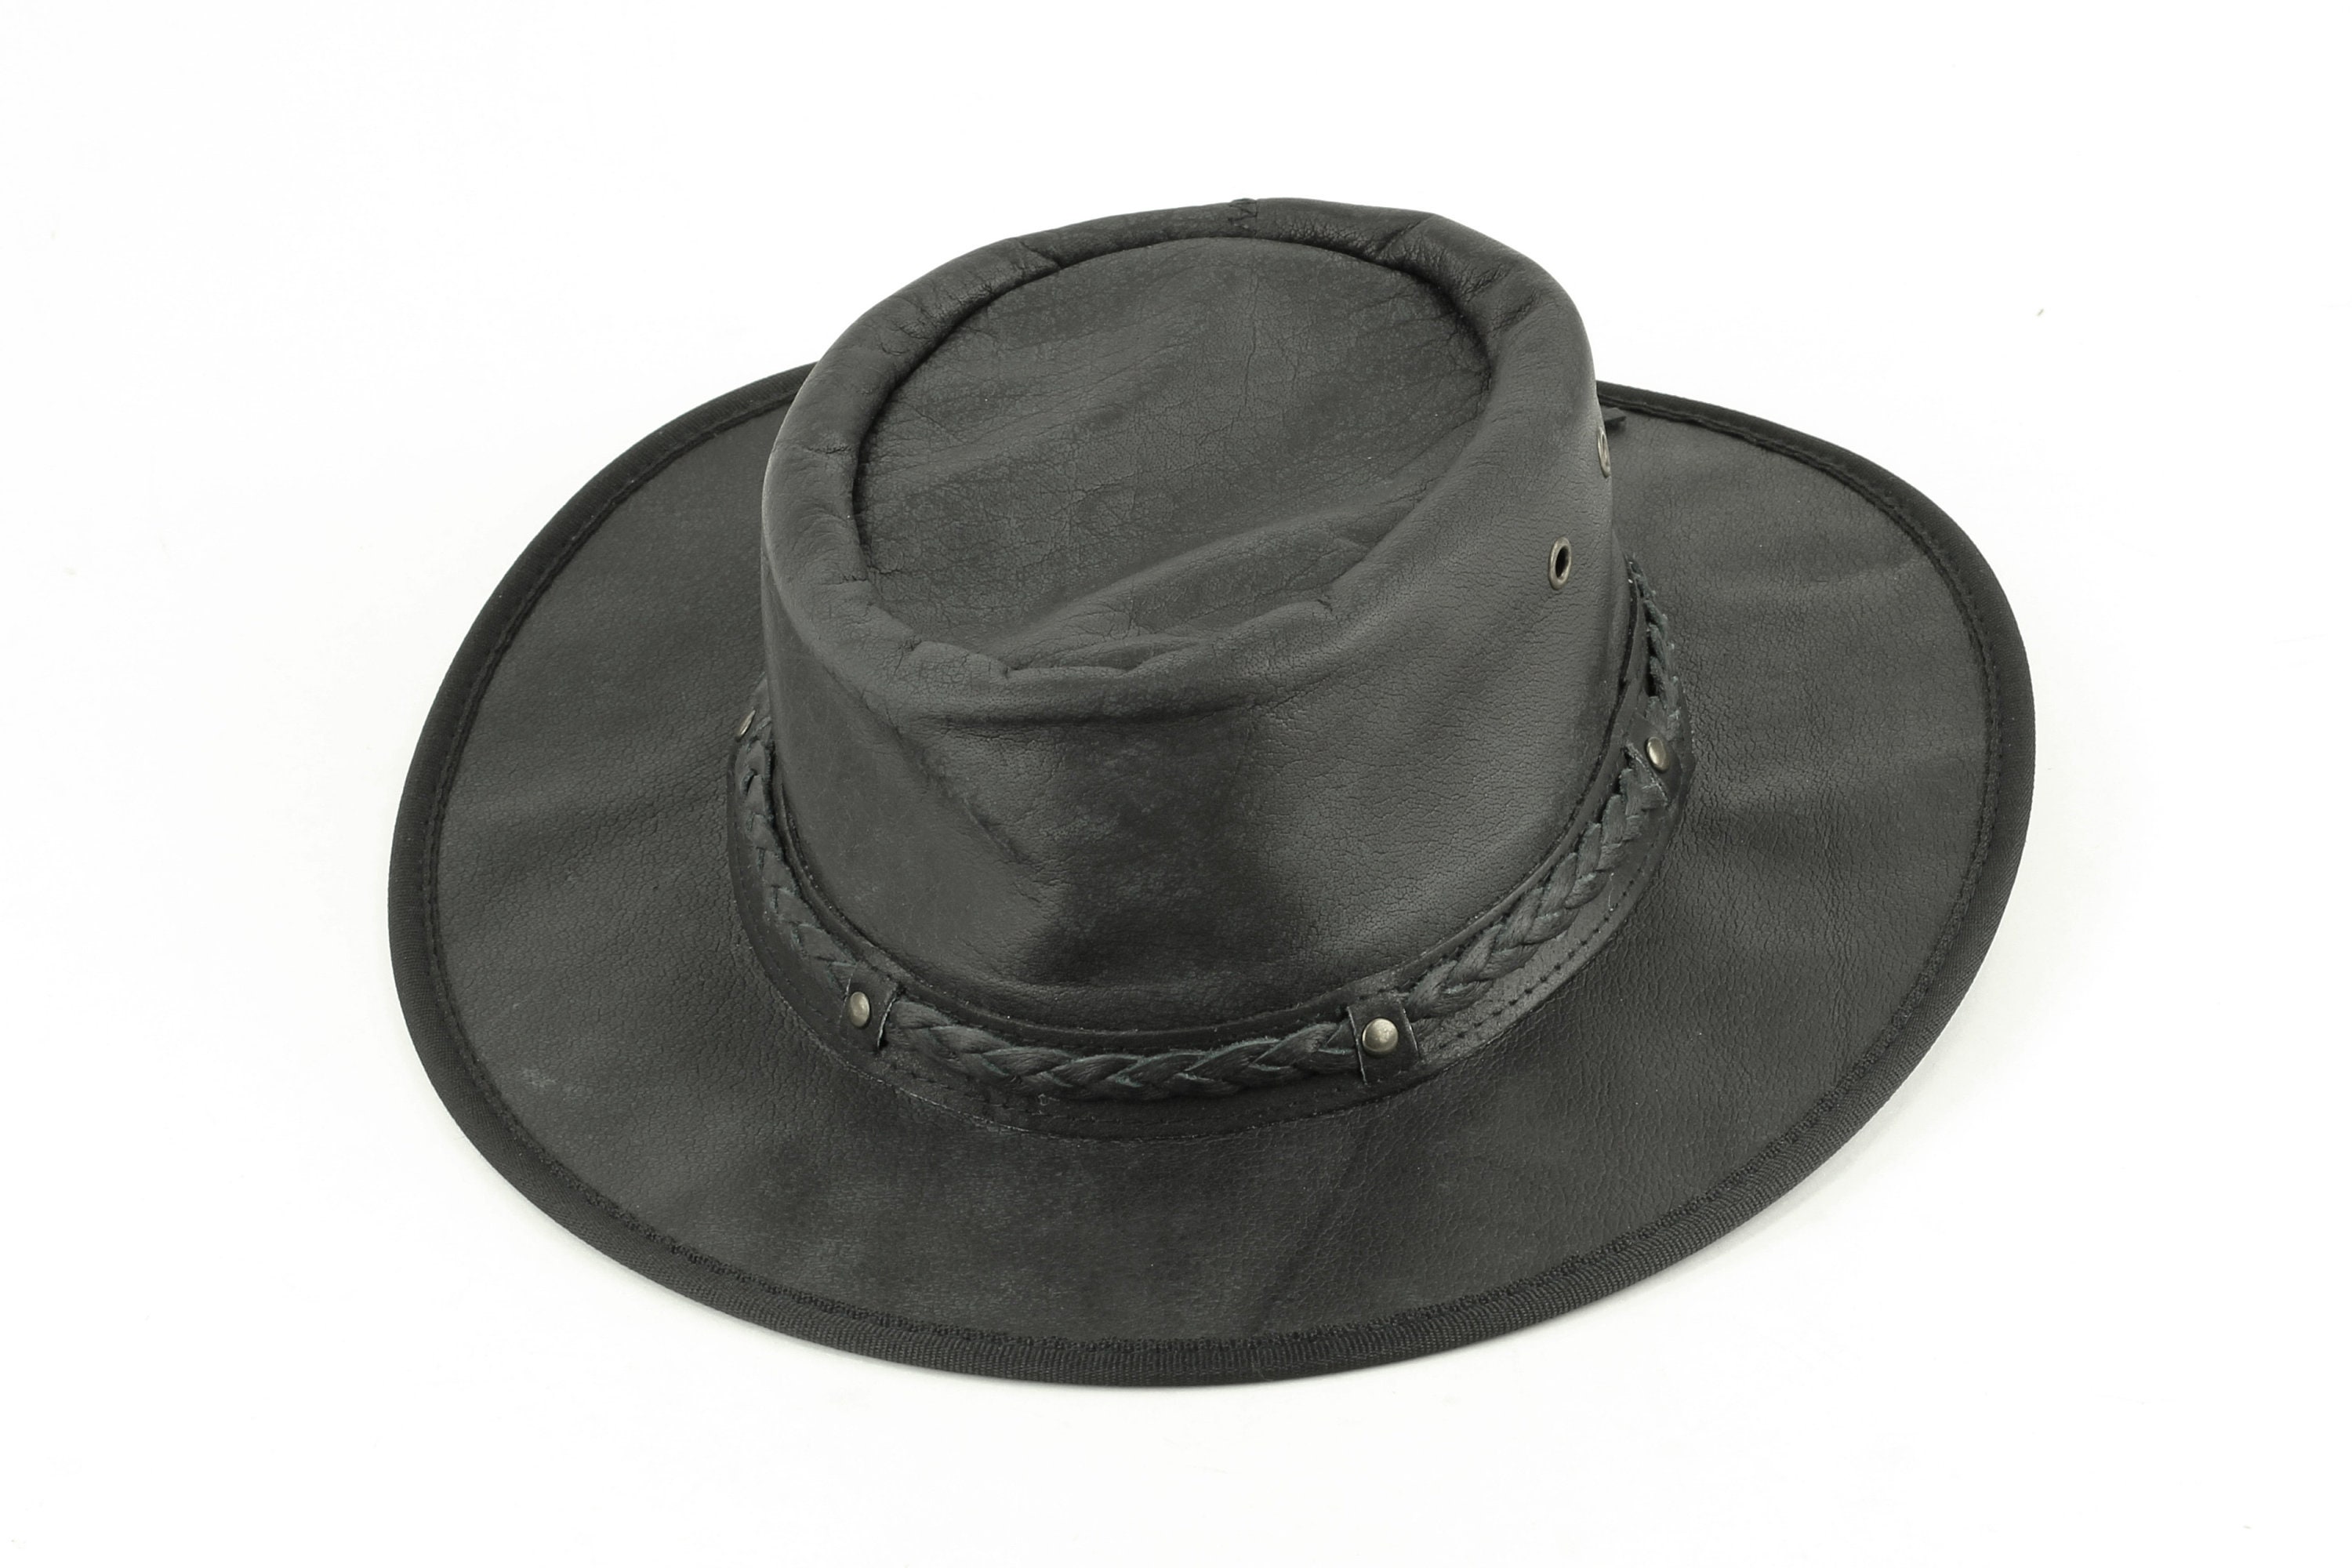 Black flat brim leather cowboy hat Leather cowboy hat with | Etsy